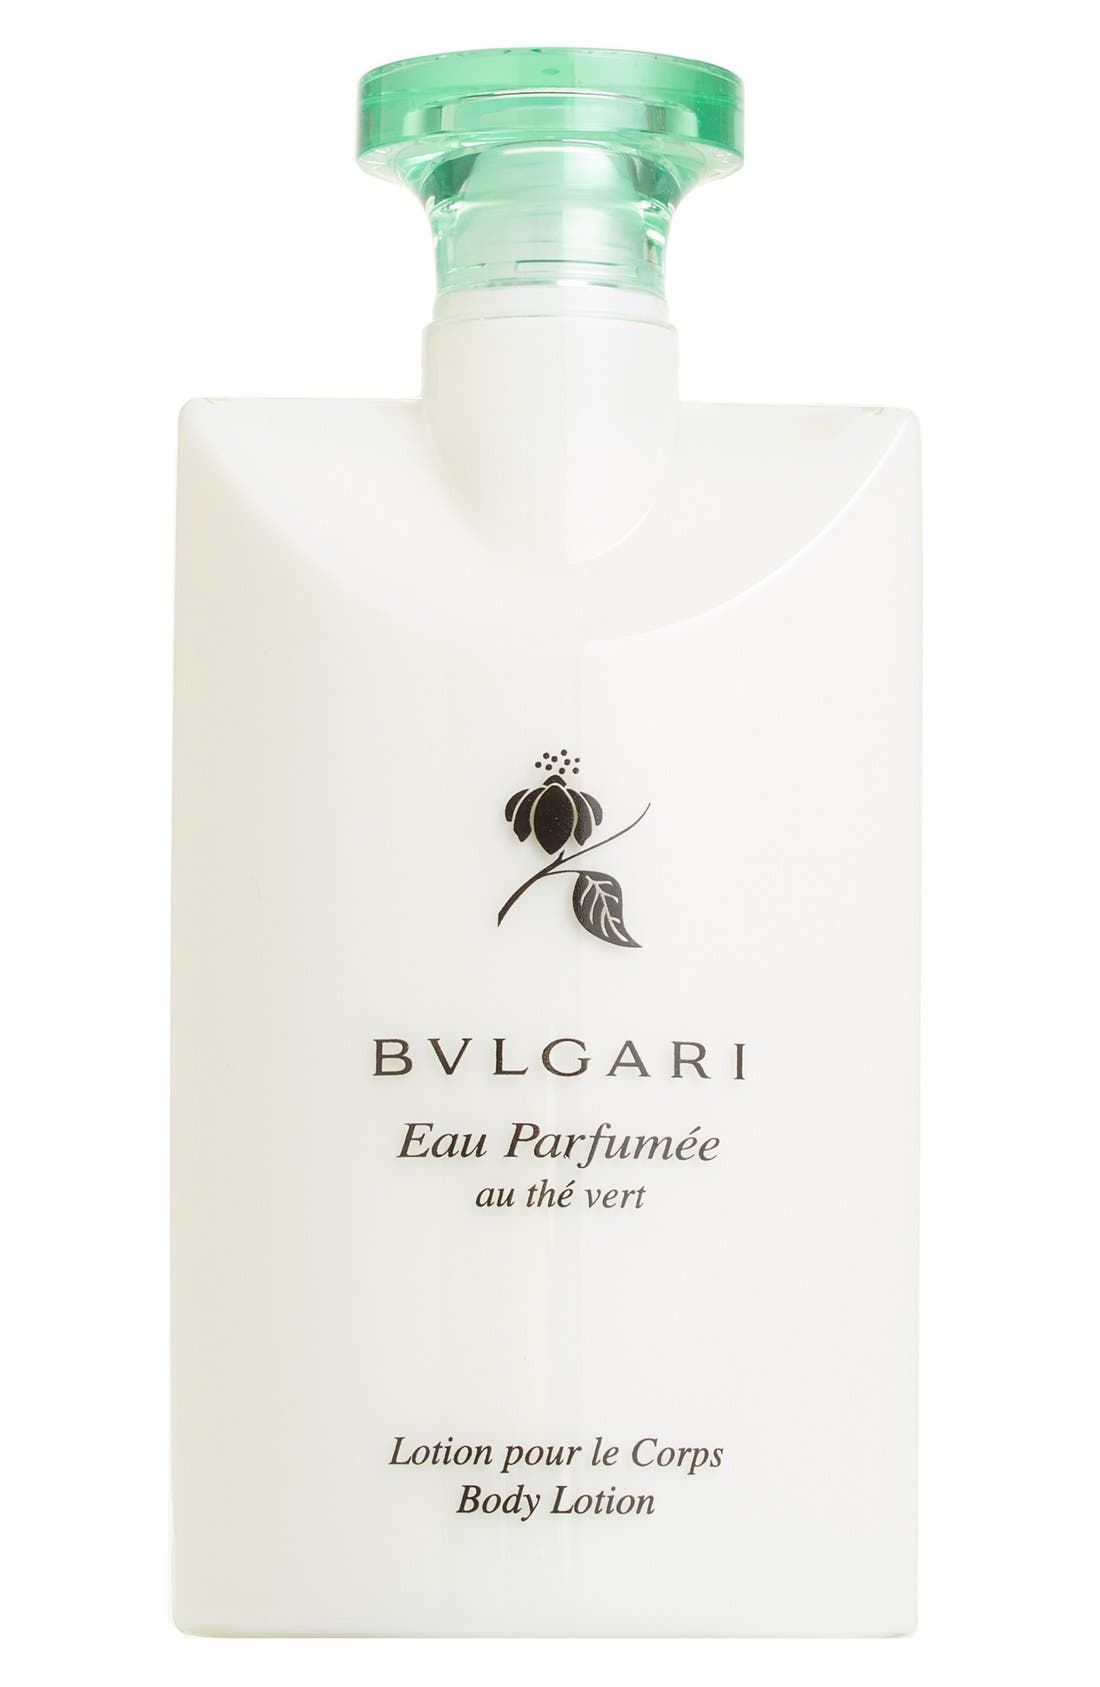 bvlgari eau parfumee body lotion